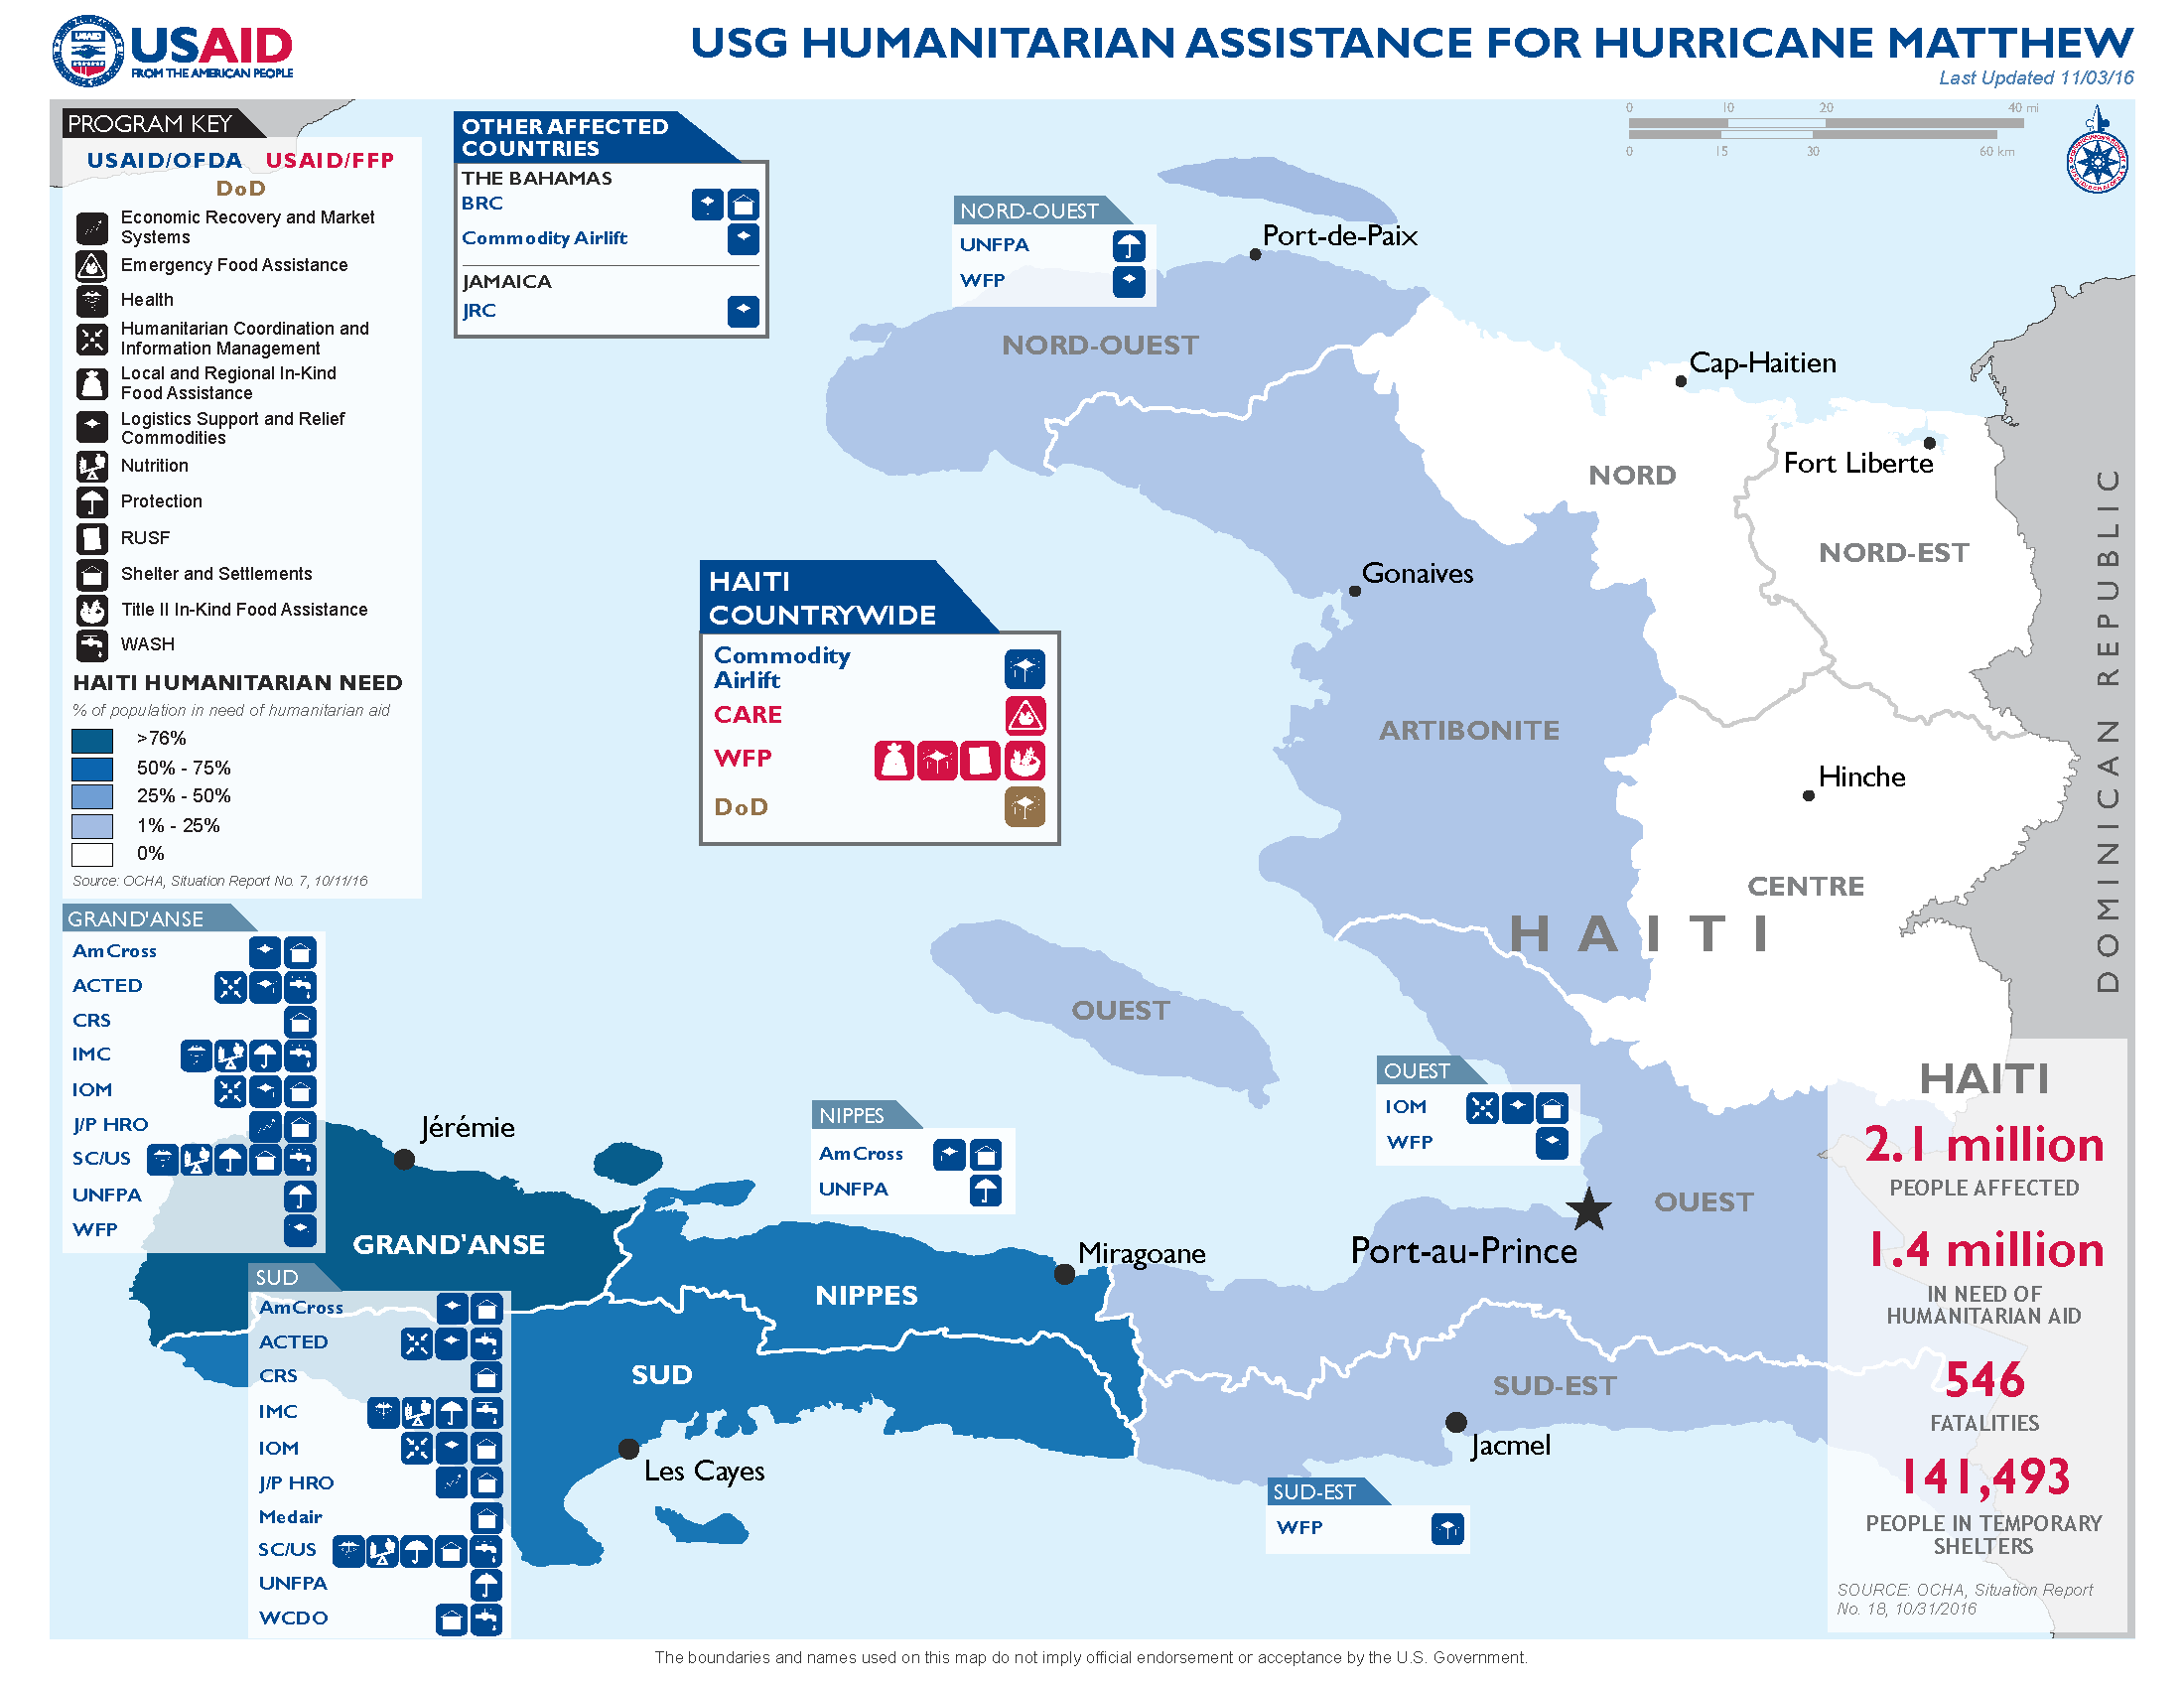 Map: USG Humanitarian Assistance for Hurricane Matthew - November 3, 2016